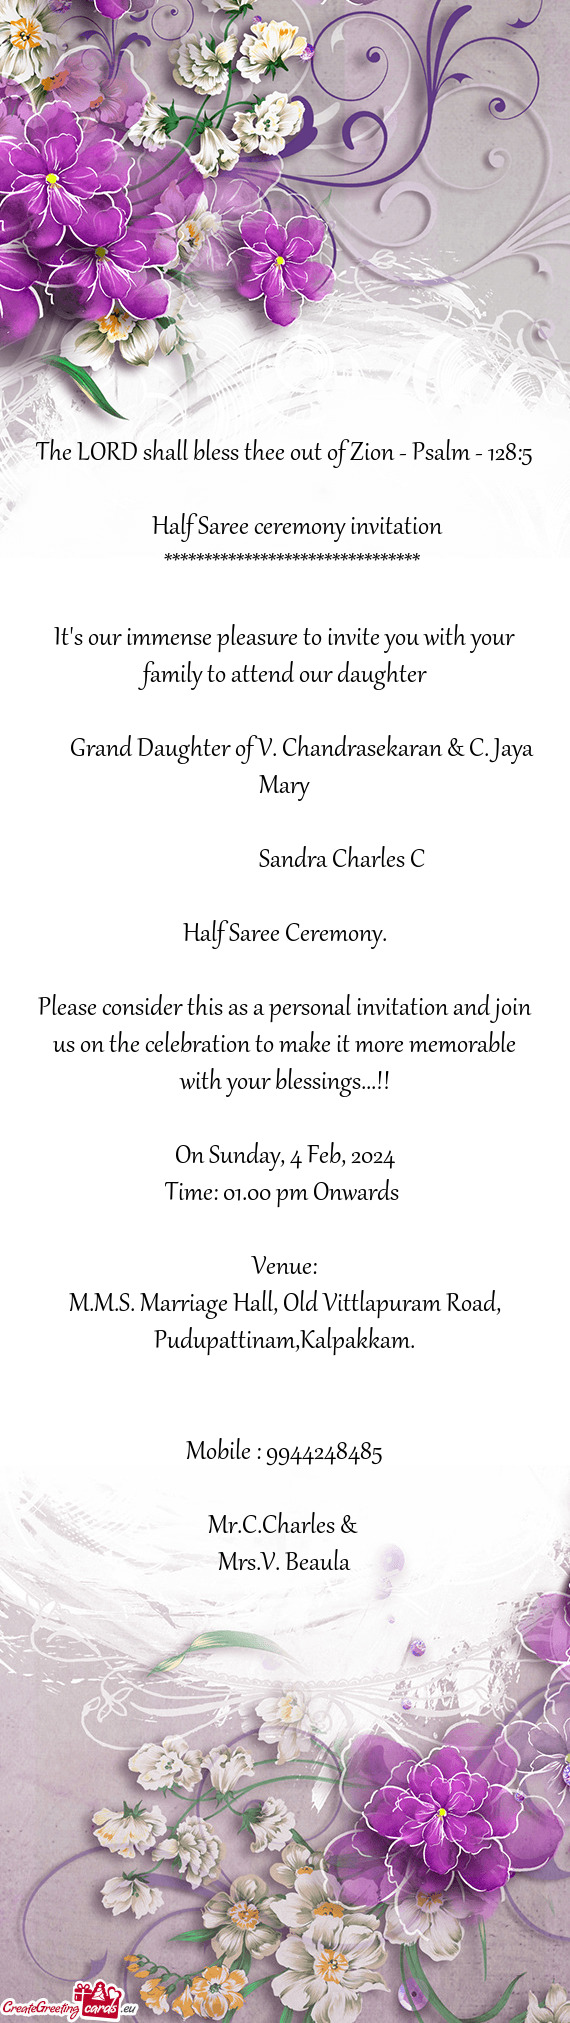 Grand Daughter of V. Chandrasekaran & C. Jaya Mary